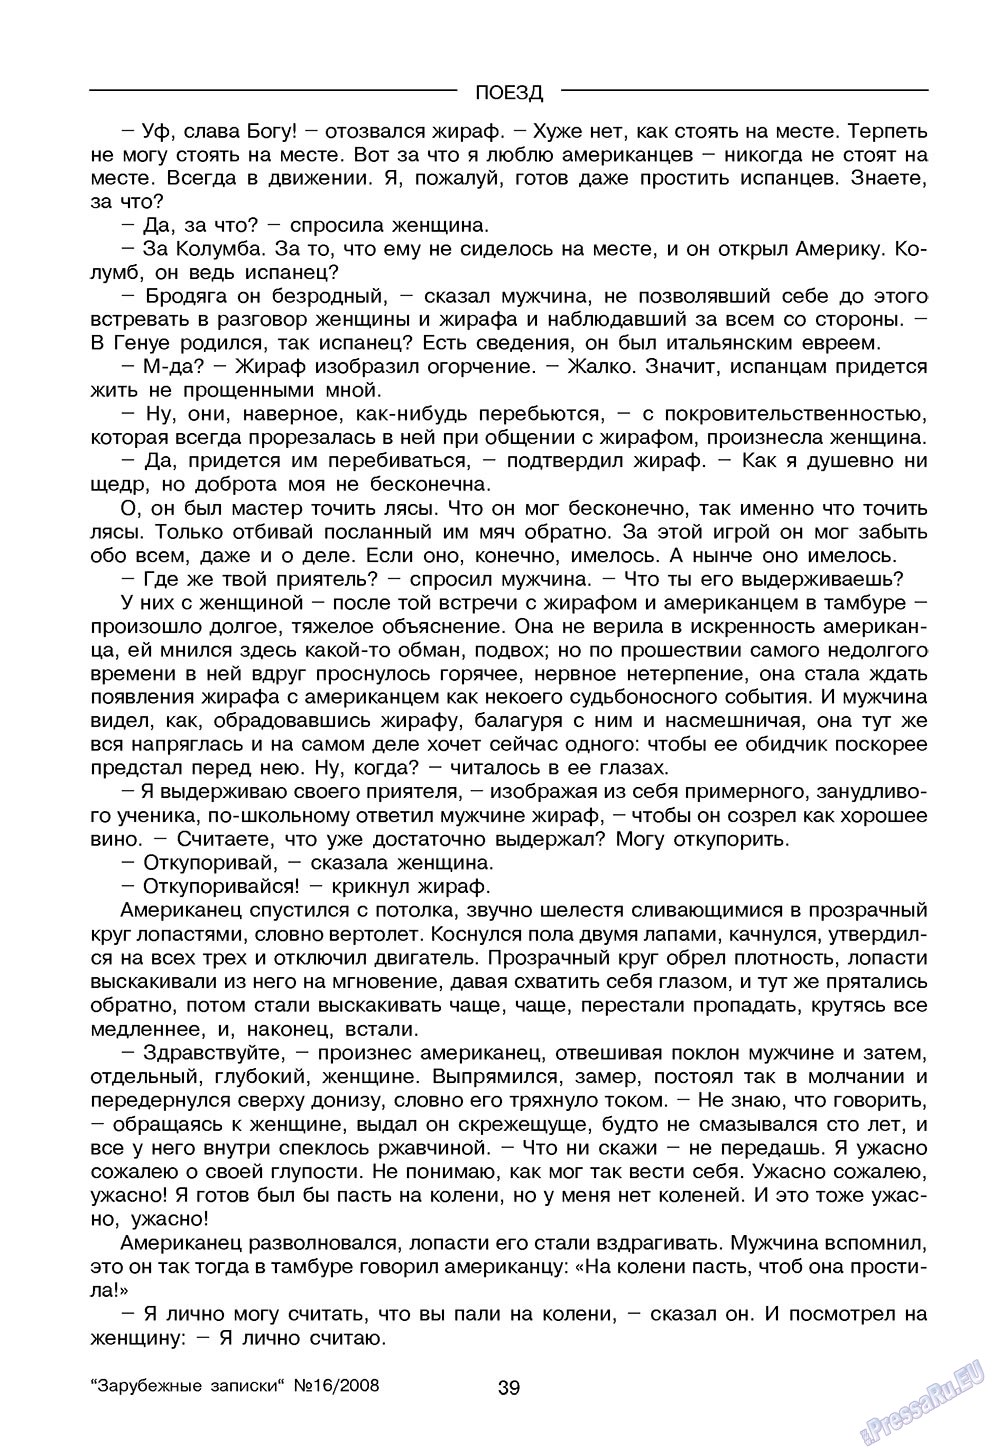 Зарубежные записки, журнал. 2008 №4 стр.41